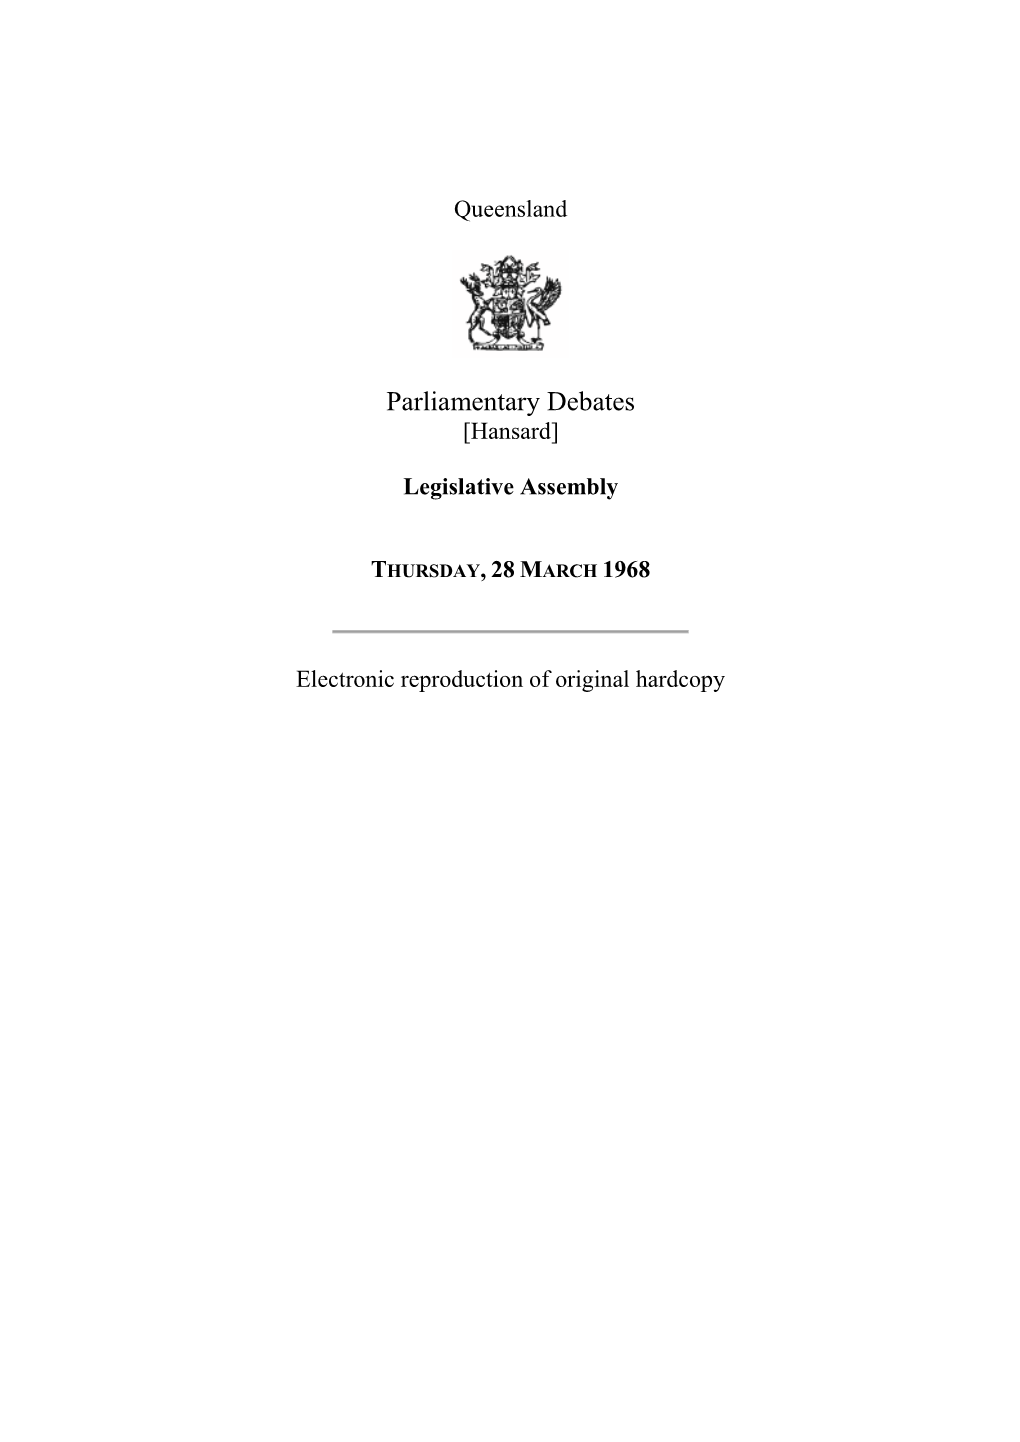 [Hansard] Legislative Assembly THURSDAY, 28 MARCH 1968 Electronic Reproduction of Original Hardcopy